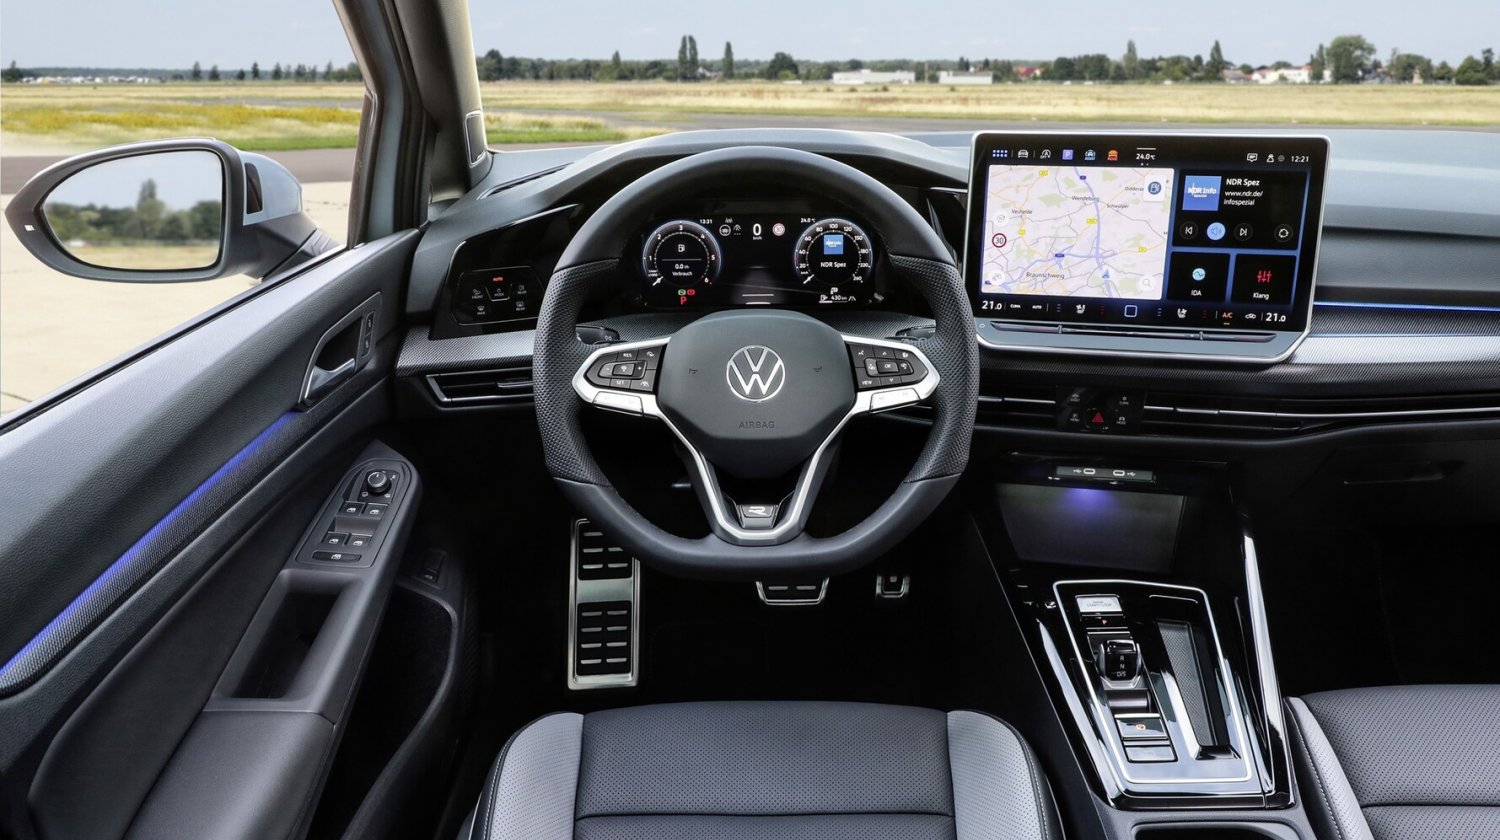 VW bringt echte Knöpfe auf dem Lenkrad zurück